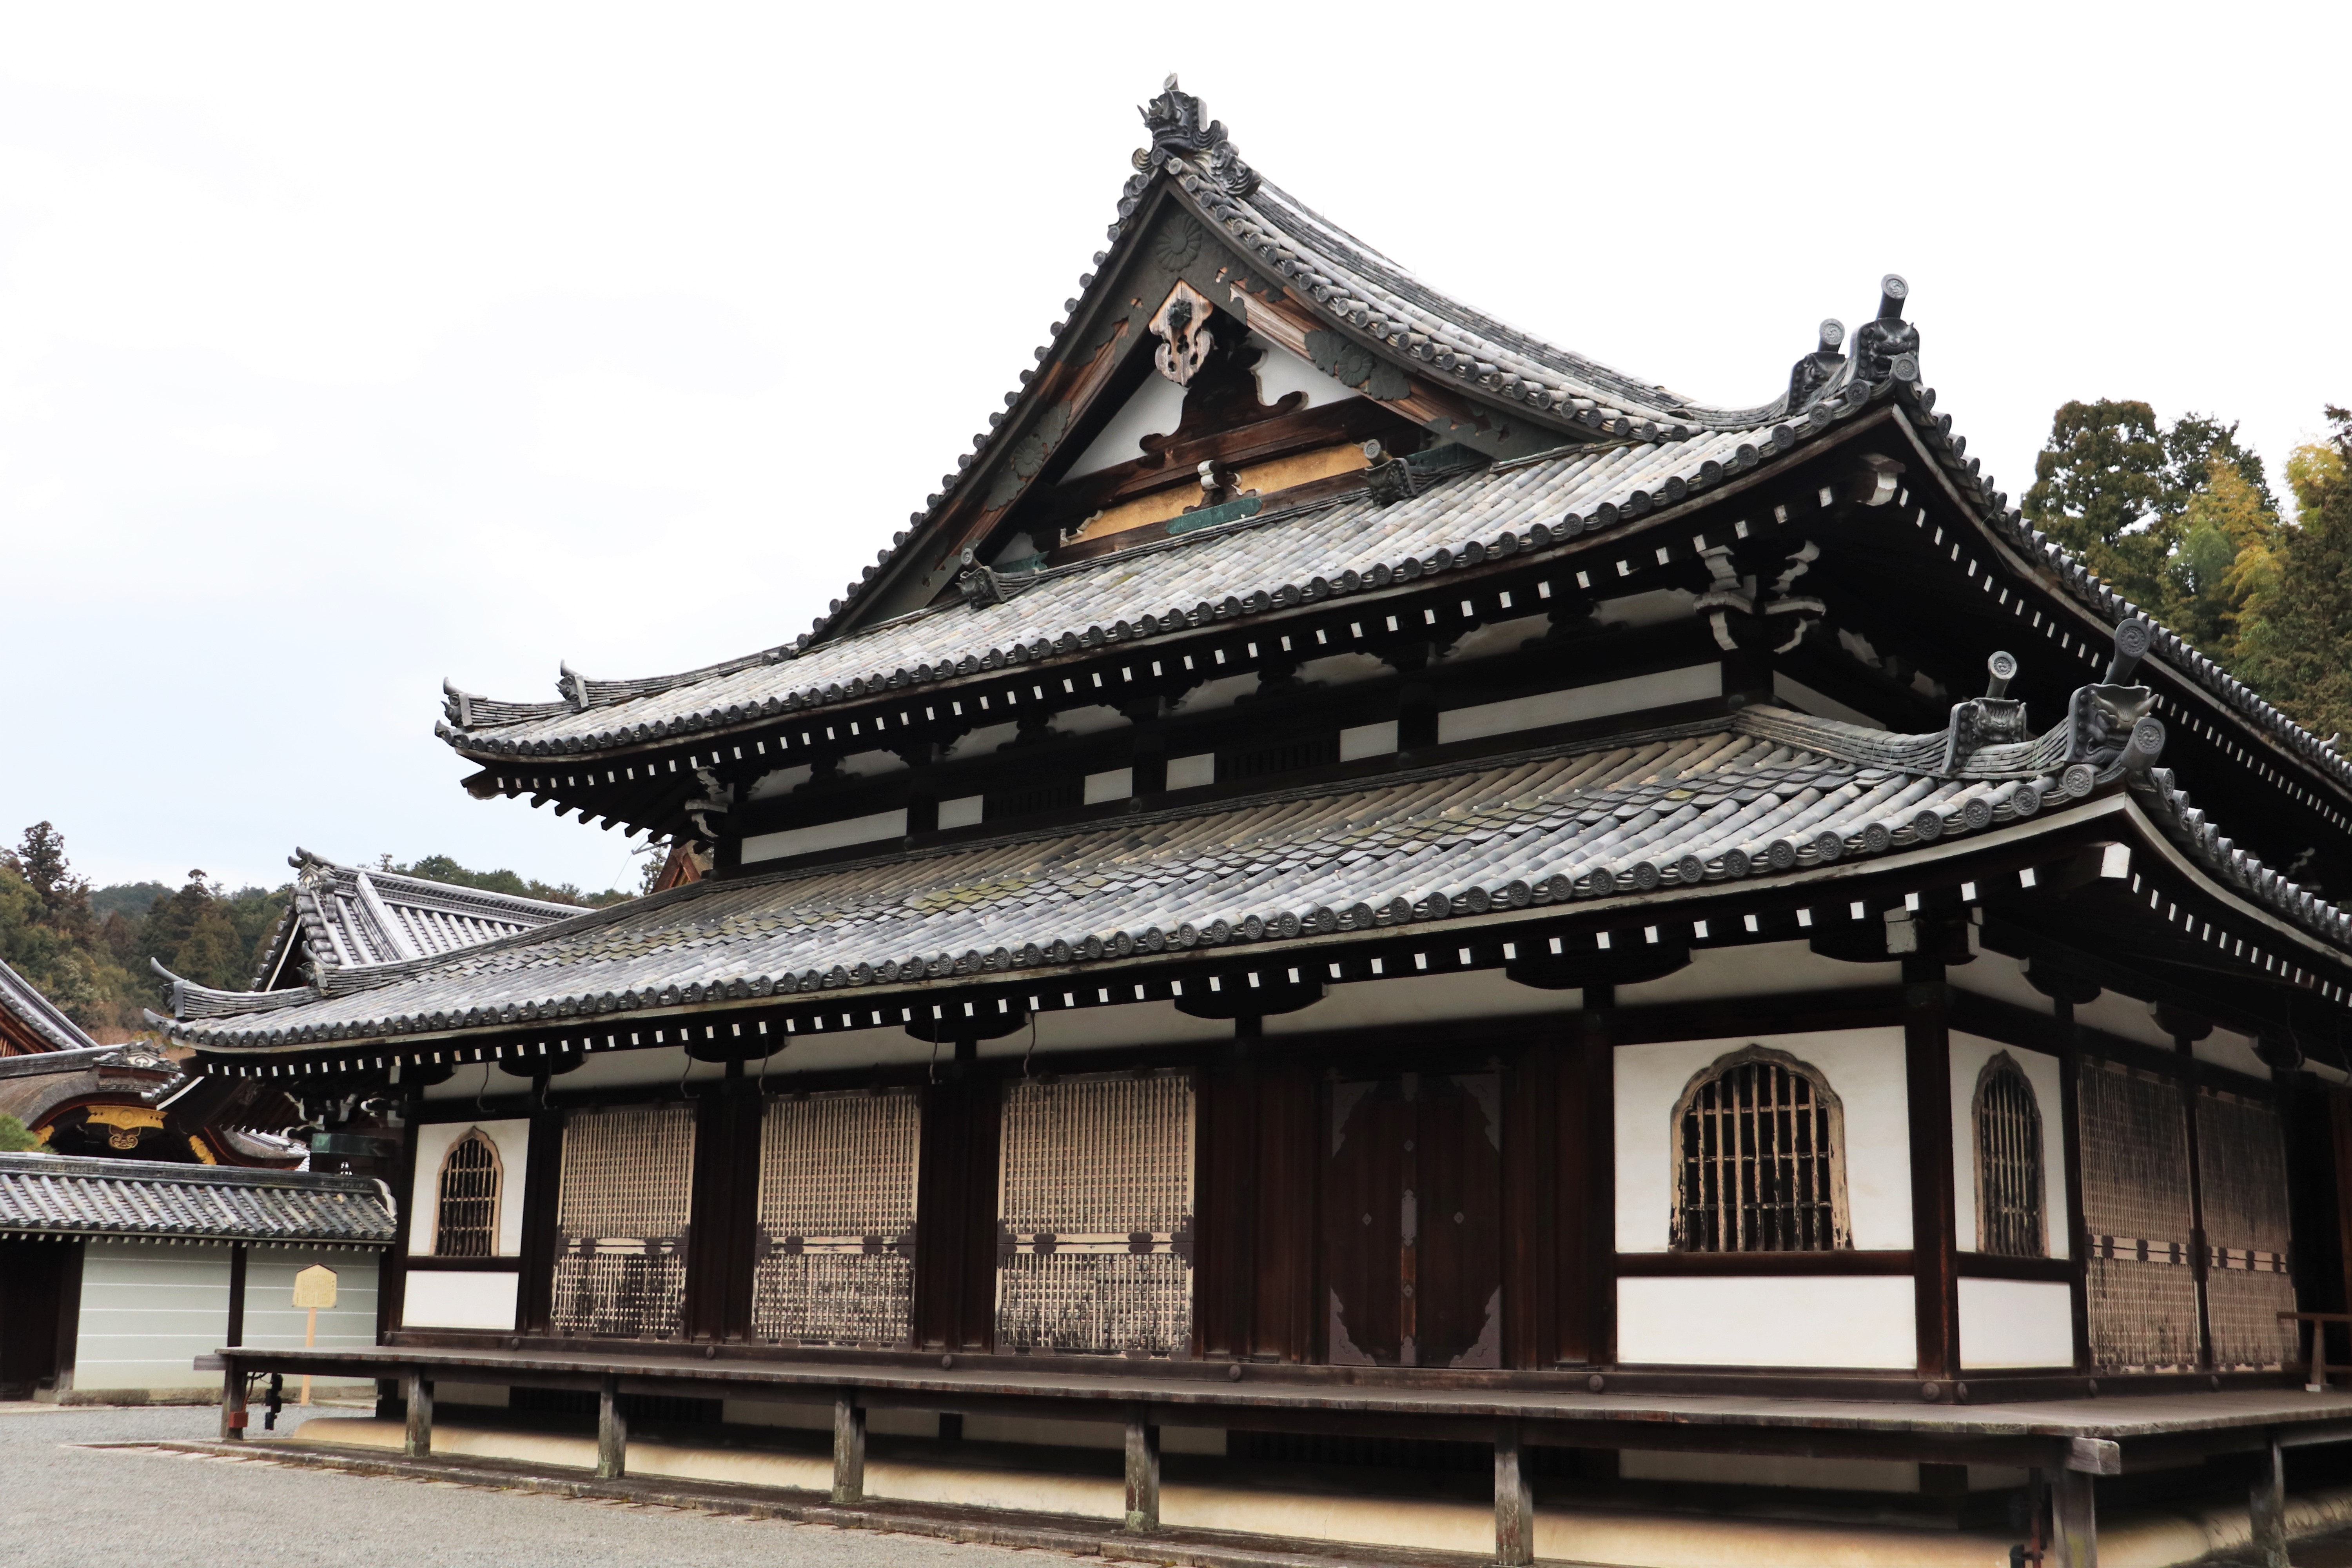 shariden of sennyu-ji temple